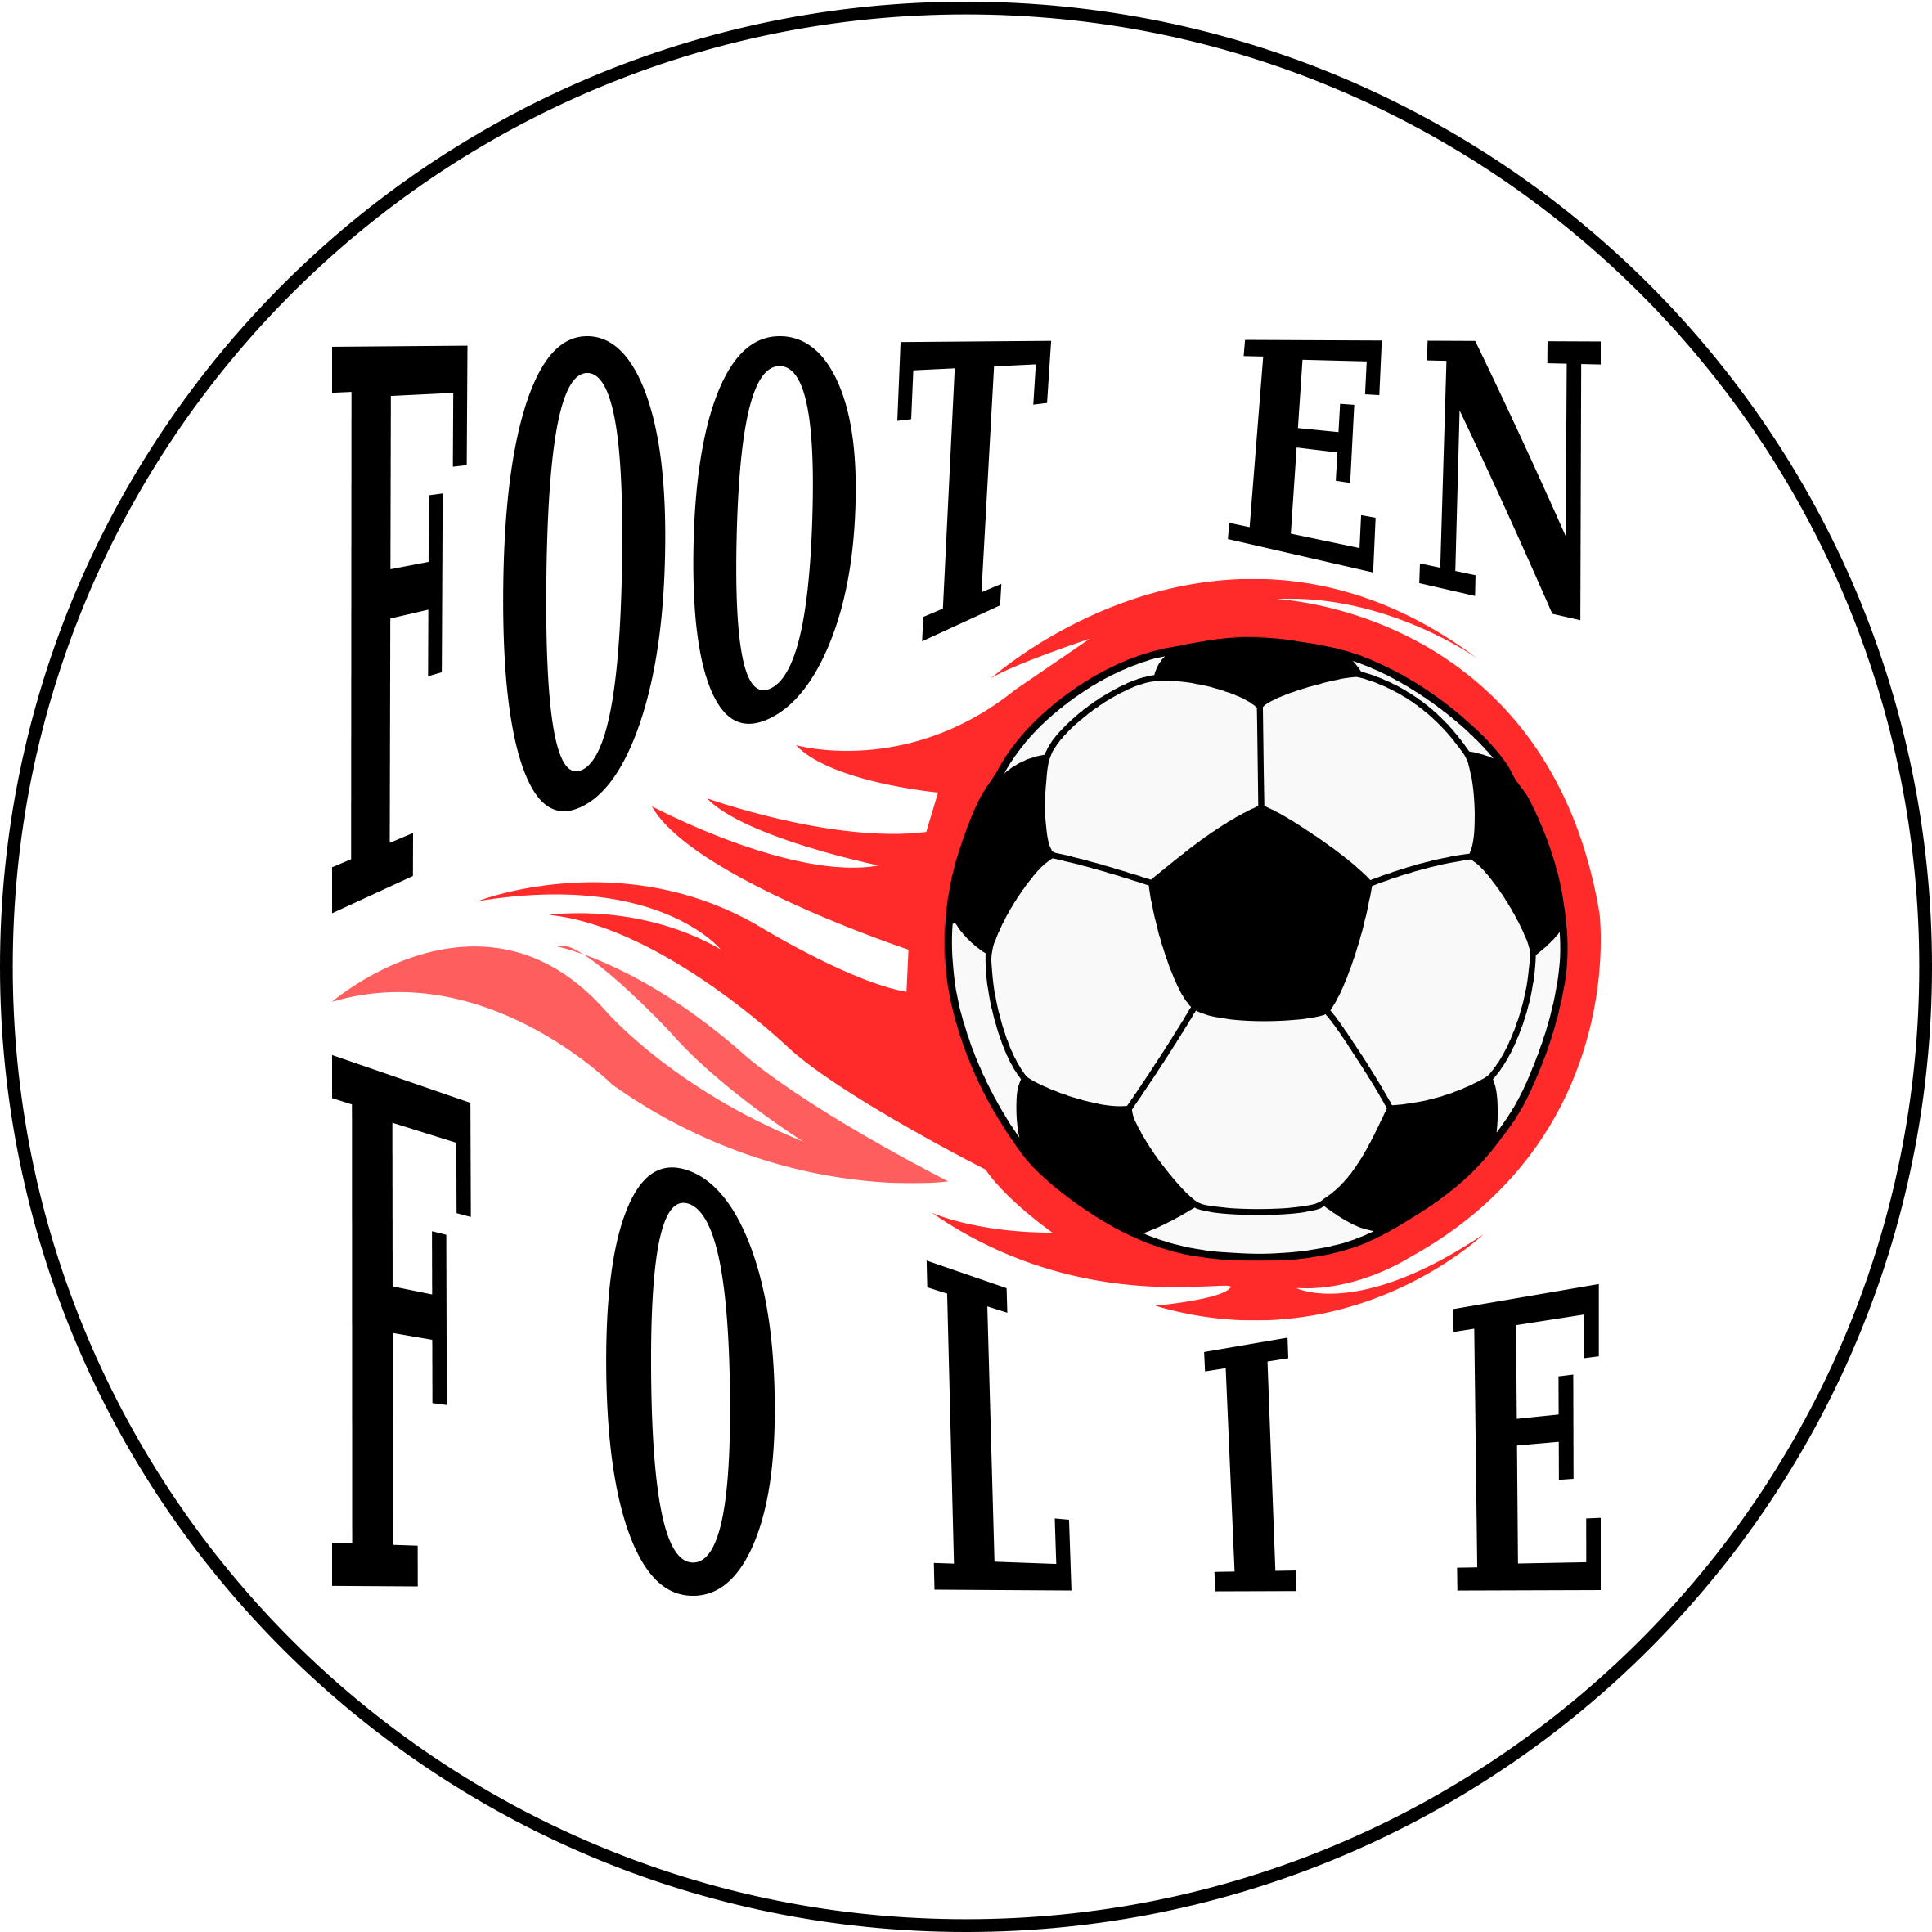 Icone logo Foot en Folie